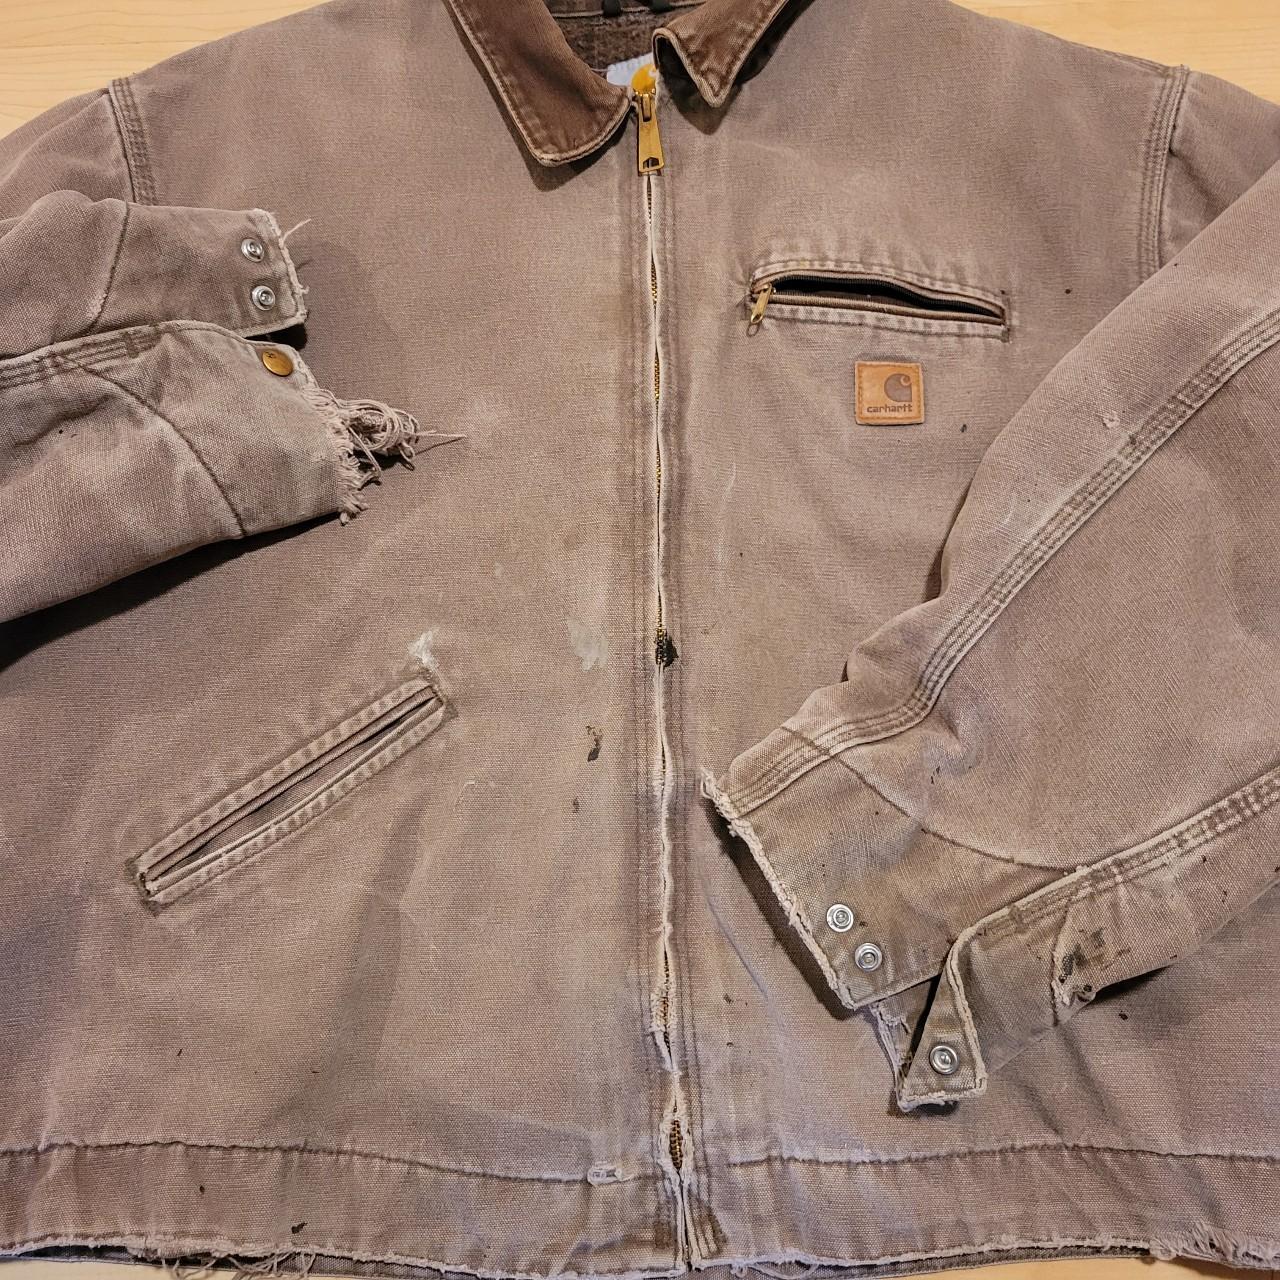 Product Image 2 - Carhartt detroit jacket full zip